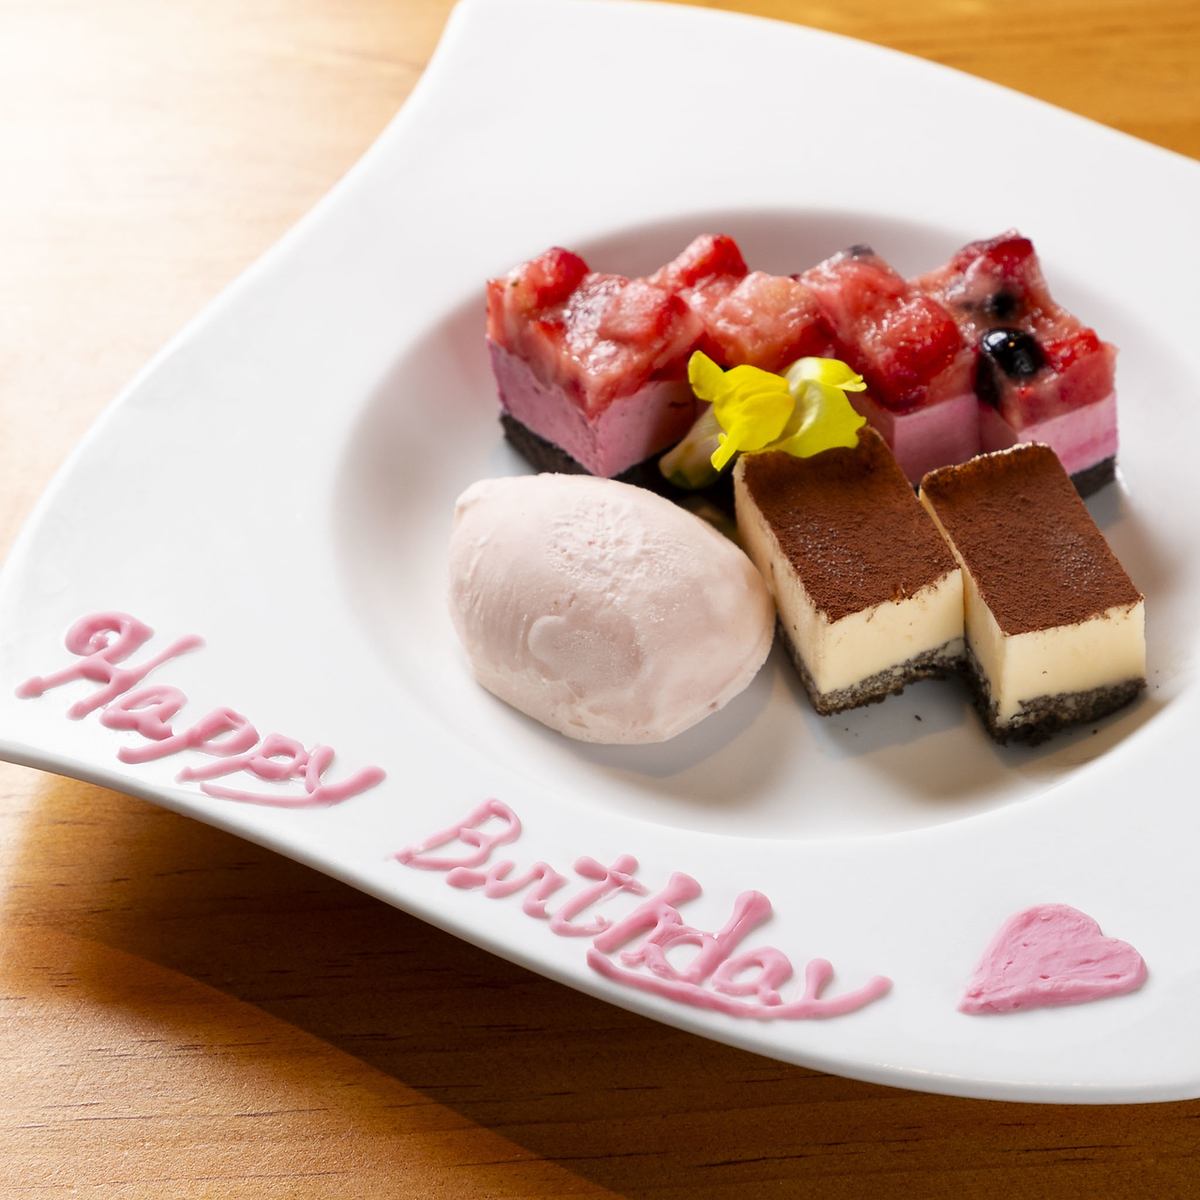 Celebrate at a modern Kyomachiya♪Free anniversary plate service available